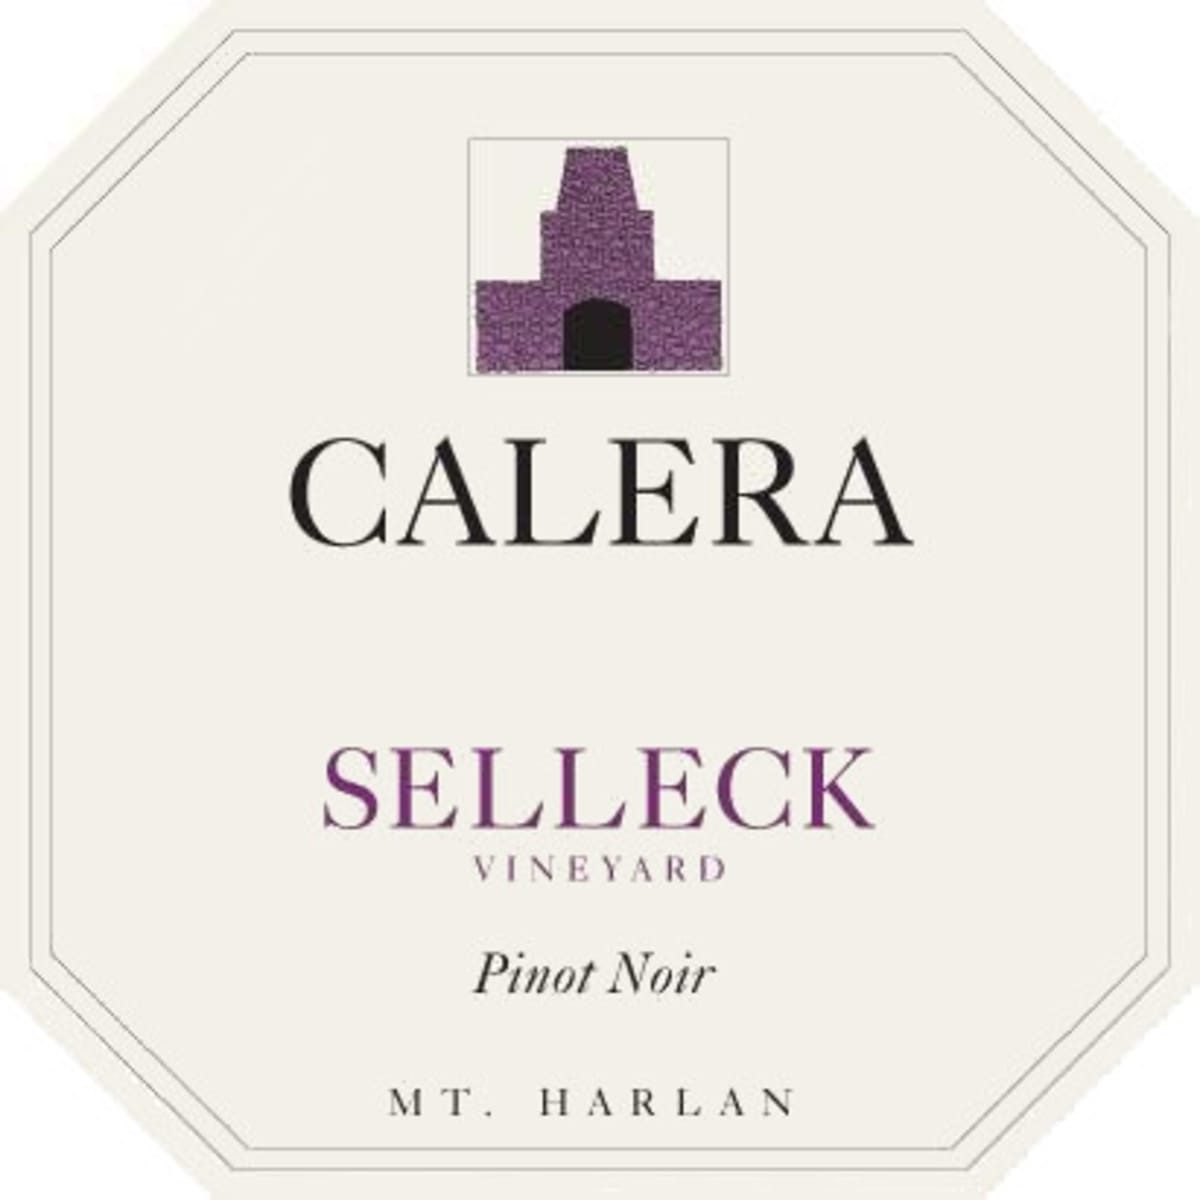 Calera Selleck Vineyard Pinot Noir 2011 Front Label